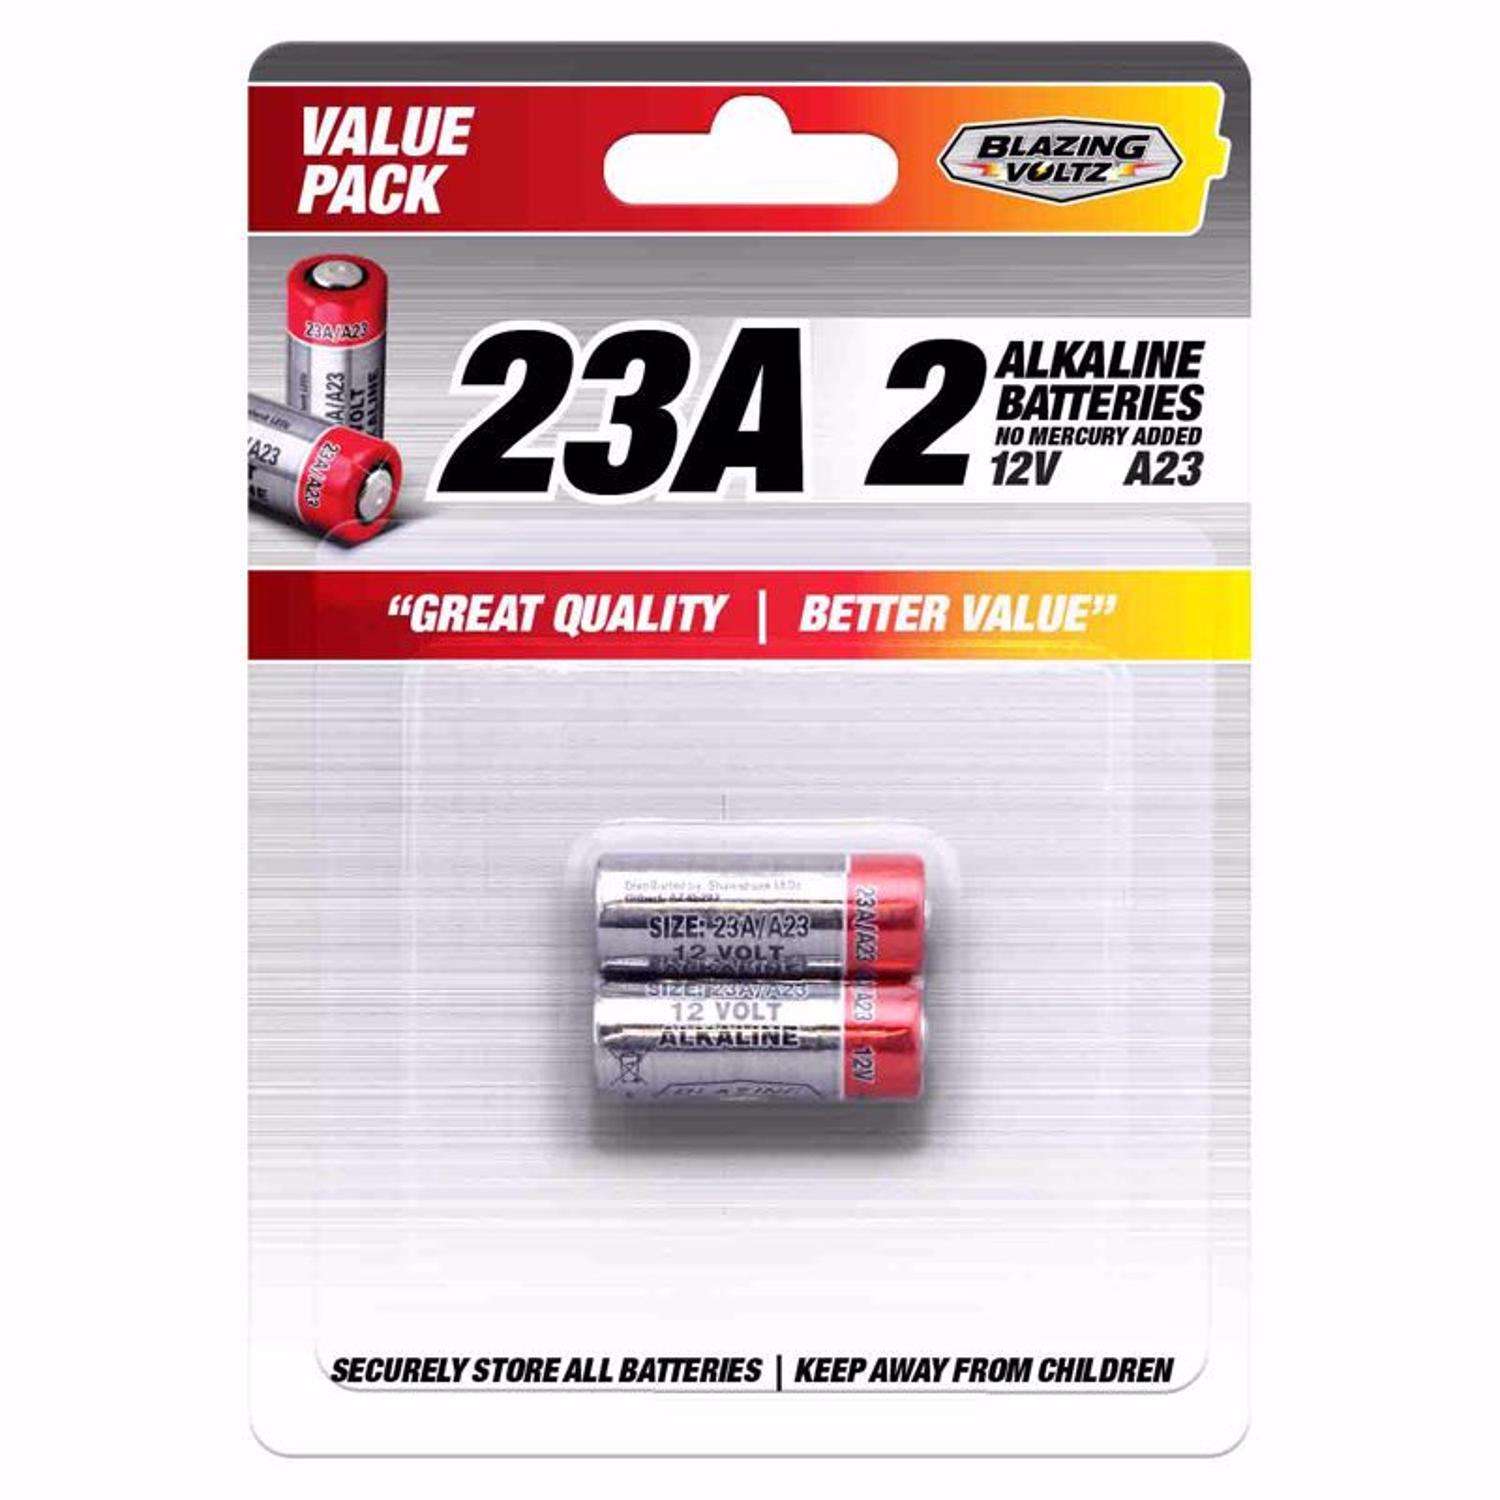 Blazing Voltz Alkaline A23 12 V Electronics Battery 23A 2 pk - Ace